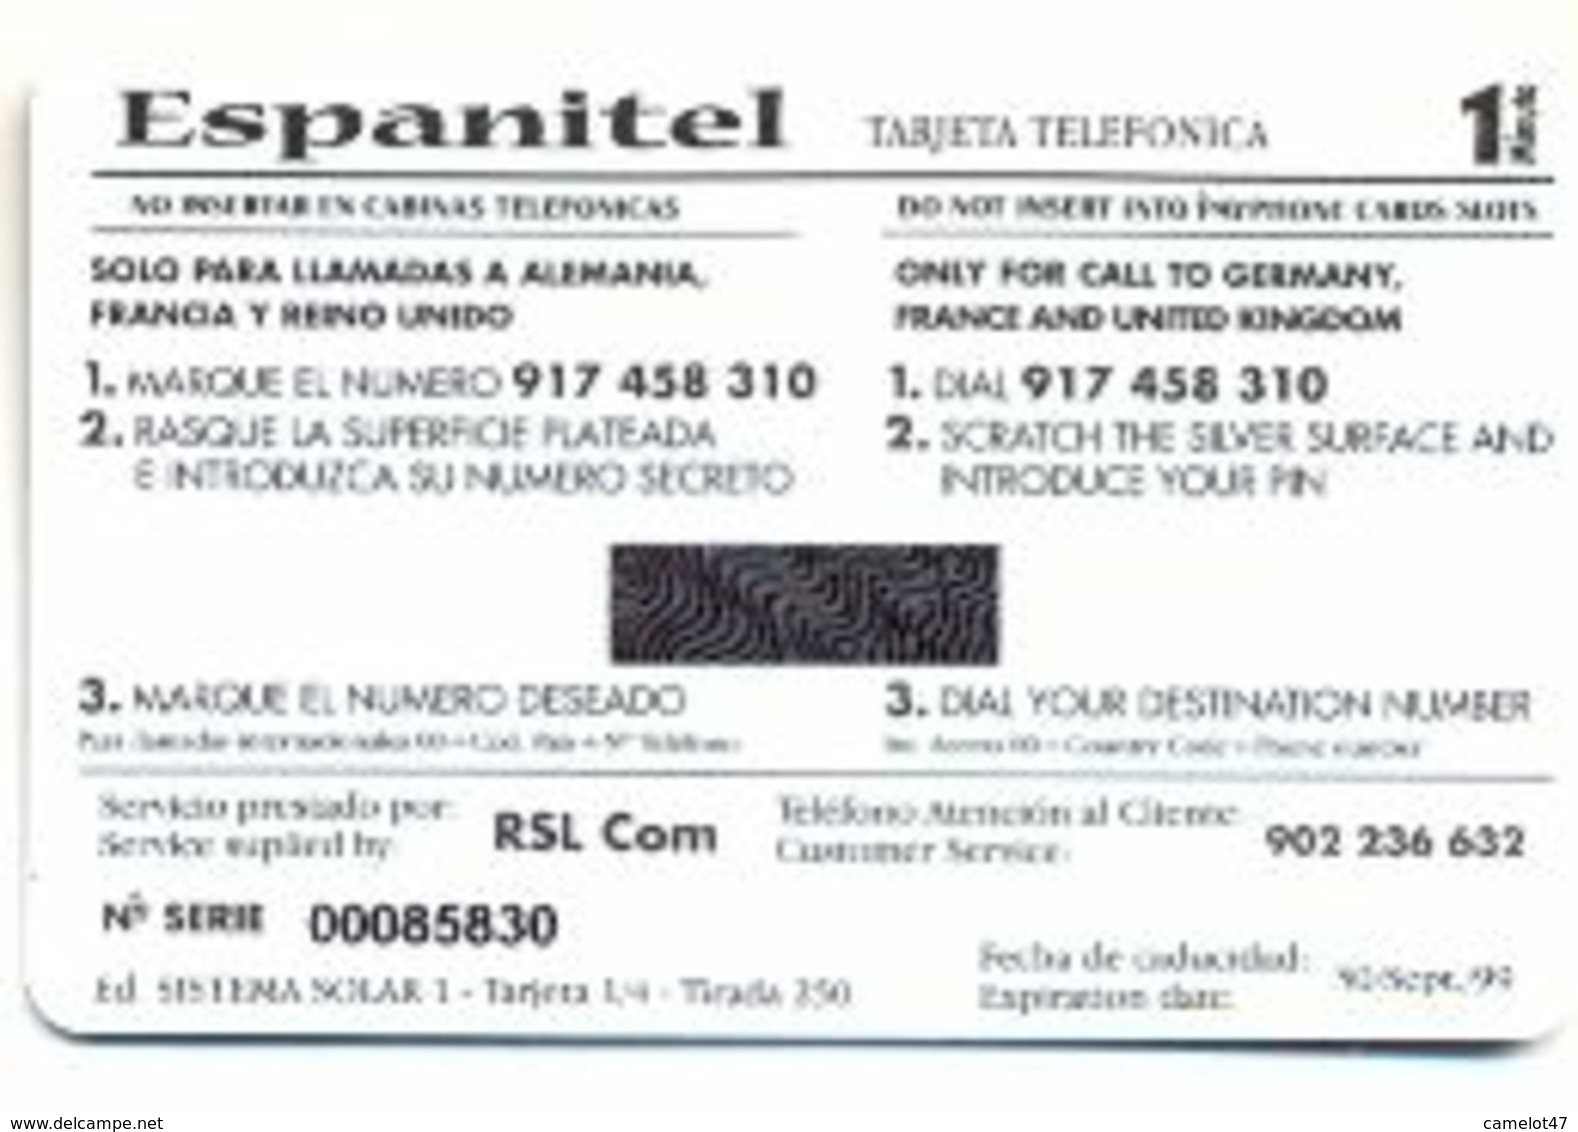 Spain Espanitel, 4 Prepaid Phone Cards, 1 Minute, Limited Edition 250 Ex, Expired, # Planetas - Espace